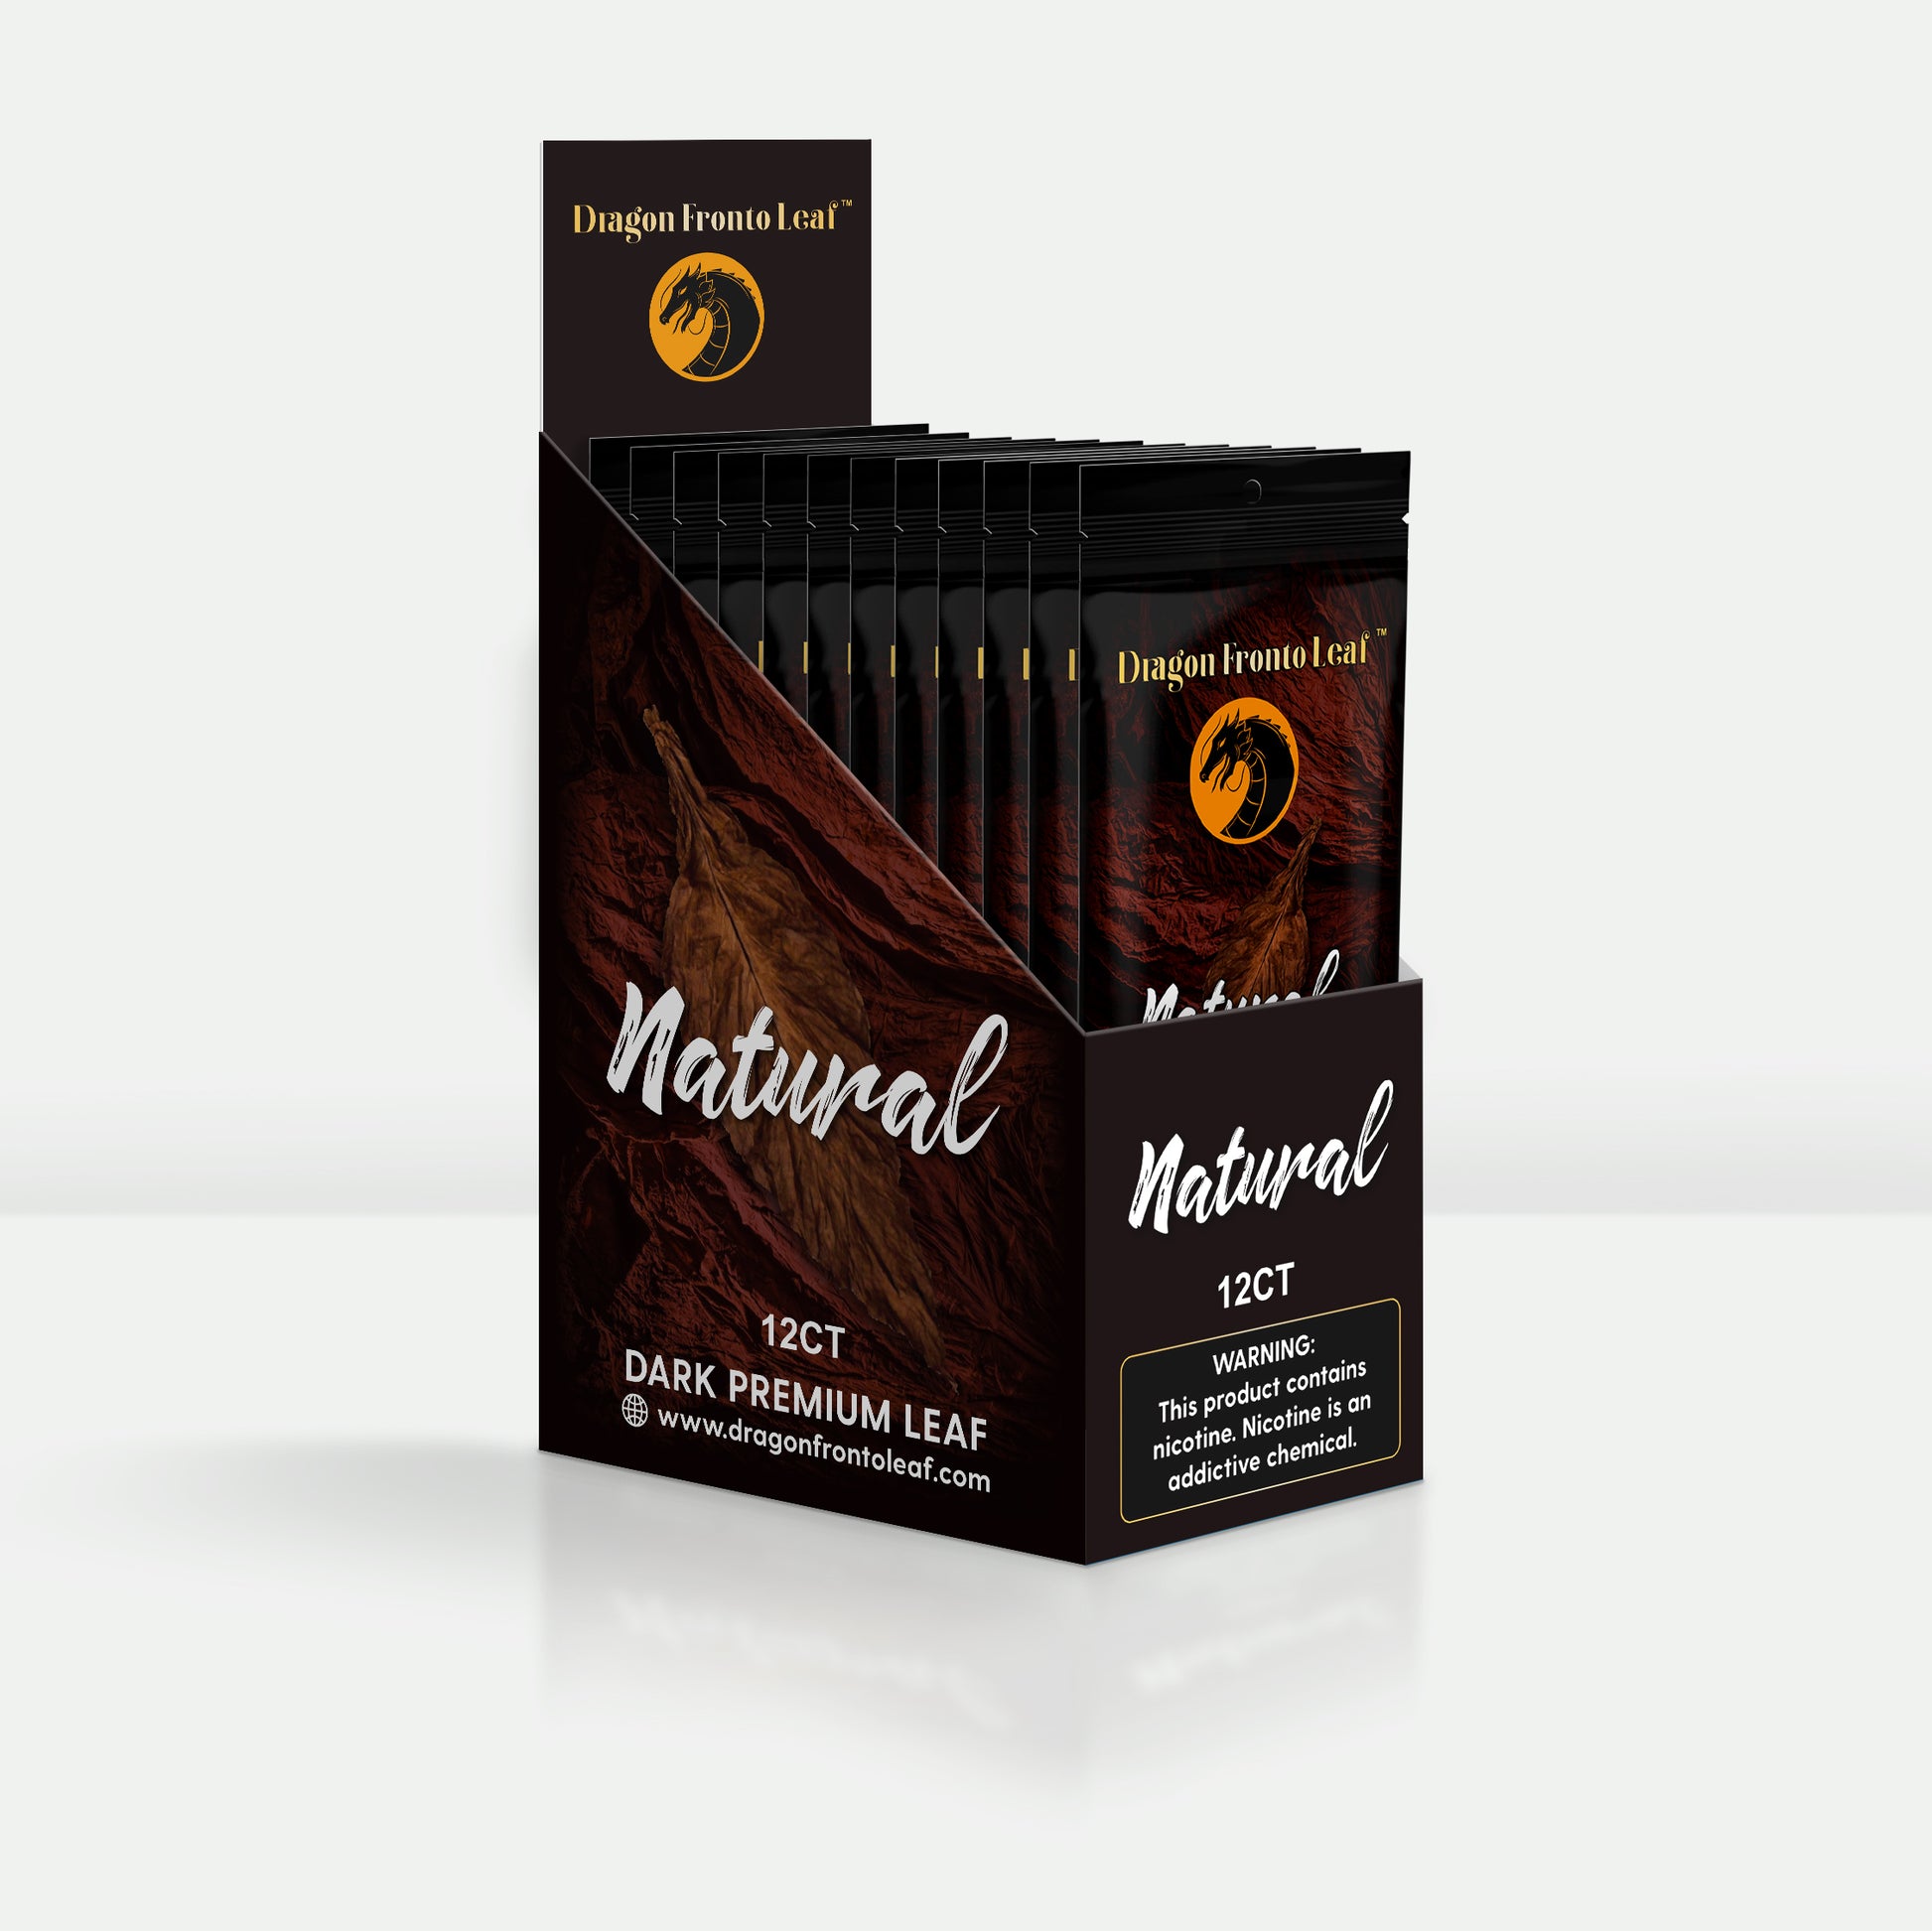 Natural Dragon Fronto Leaf Dark Premium Tobacco Leaf Opened Box